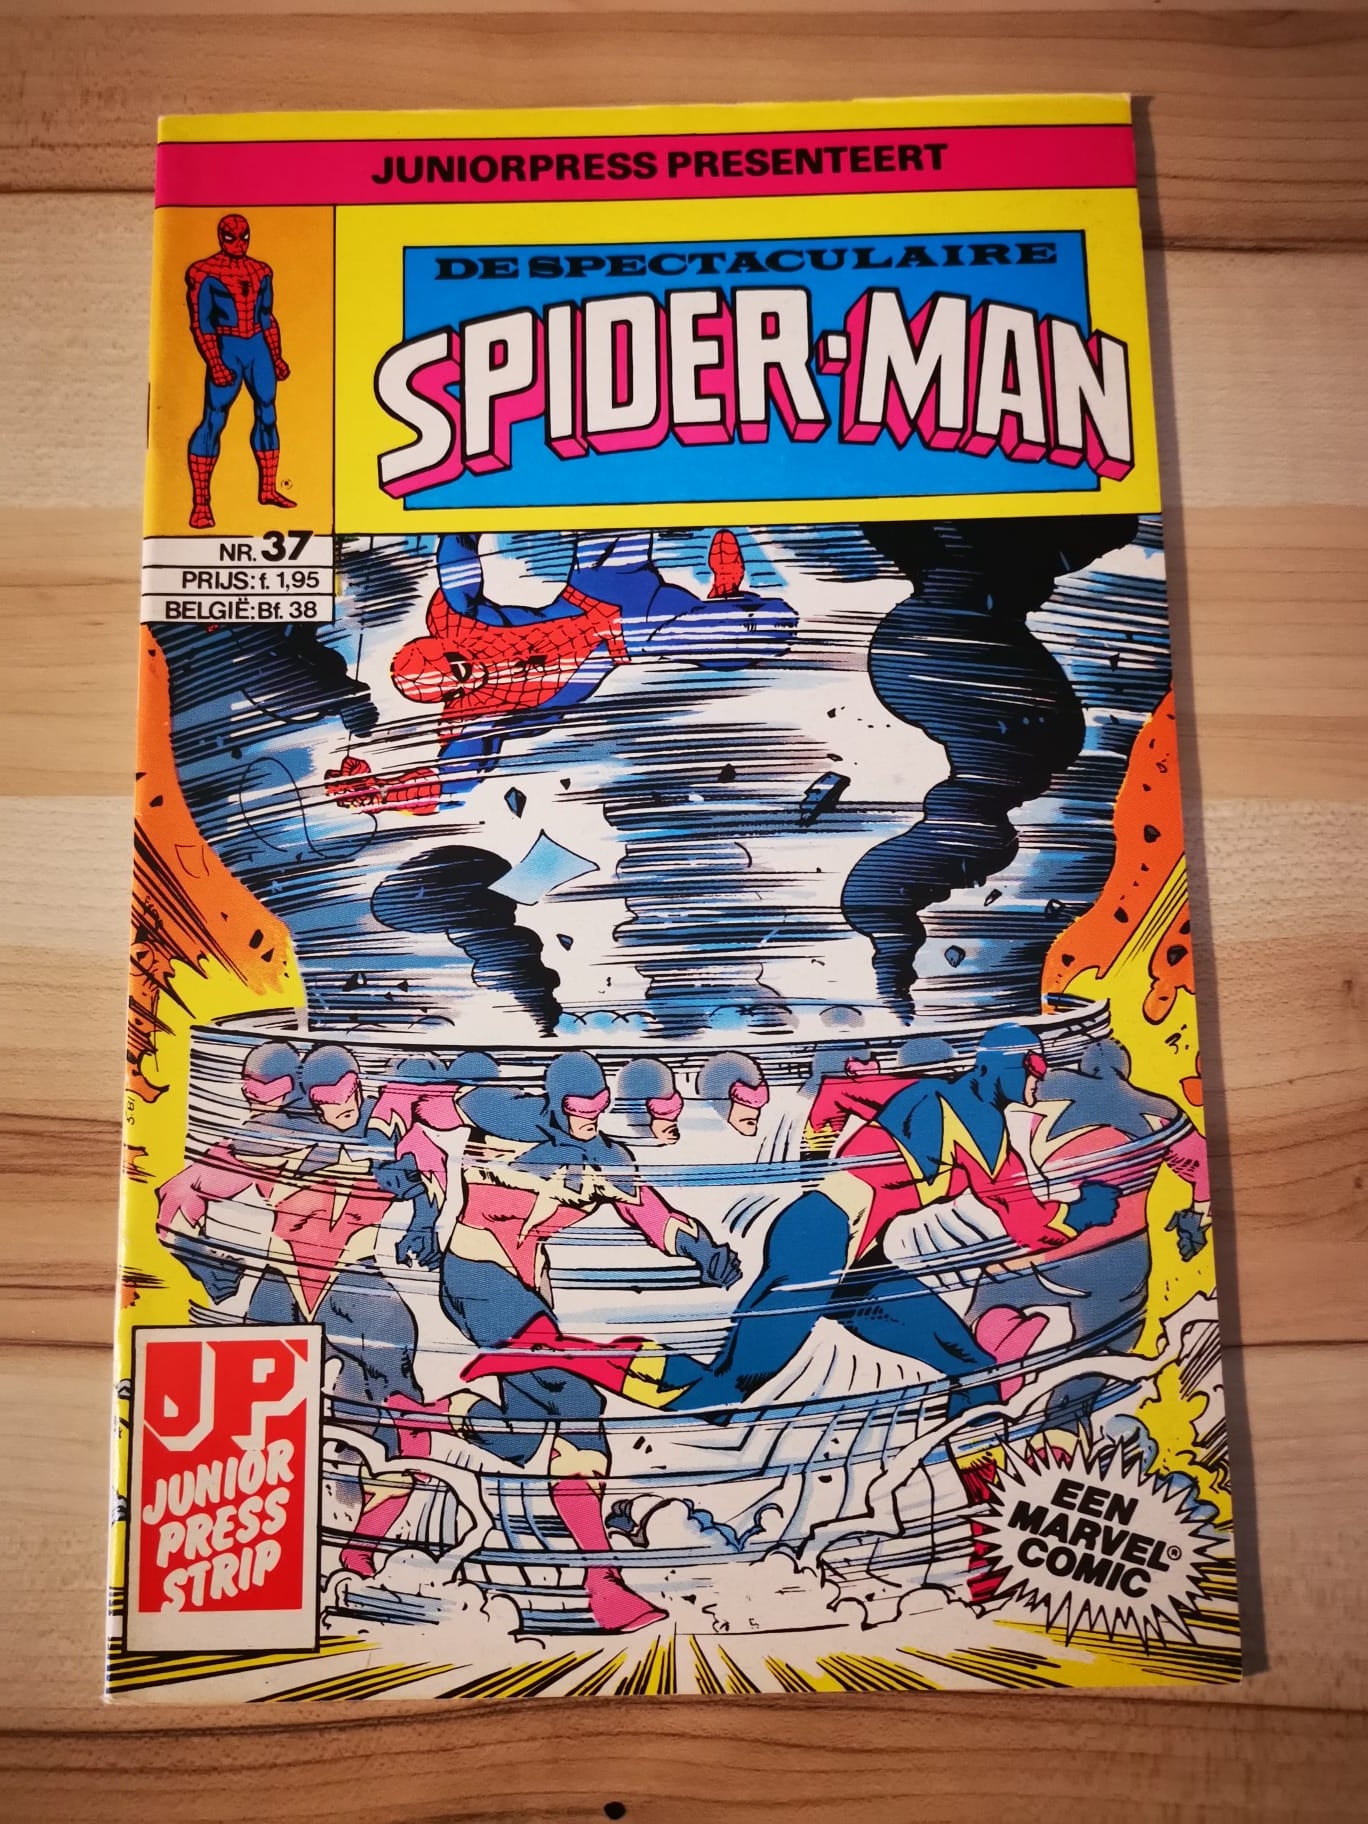 De spektakulaire spiderman #37